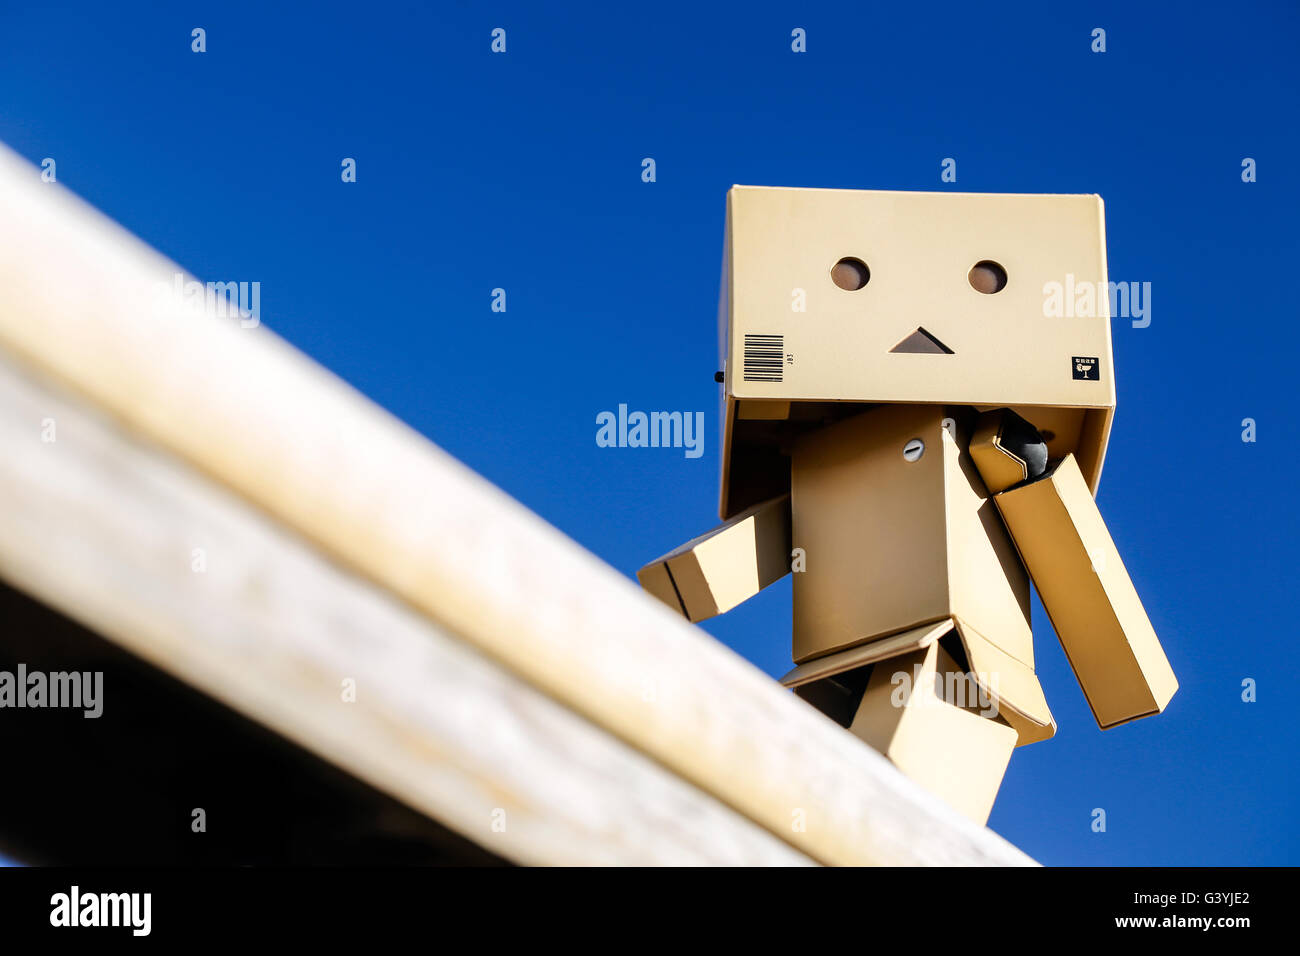 A Danbo Danboard fictional Robot Character walking along a wooden rail against a deep blue sky Stock Photo